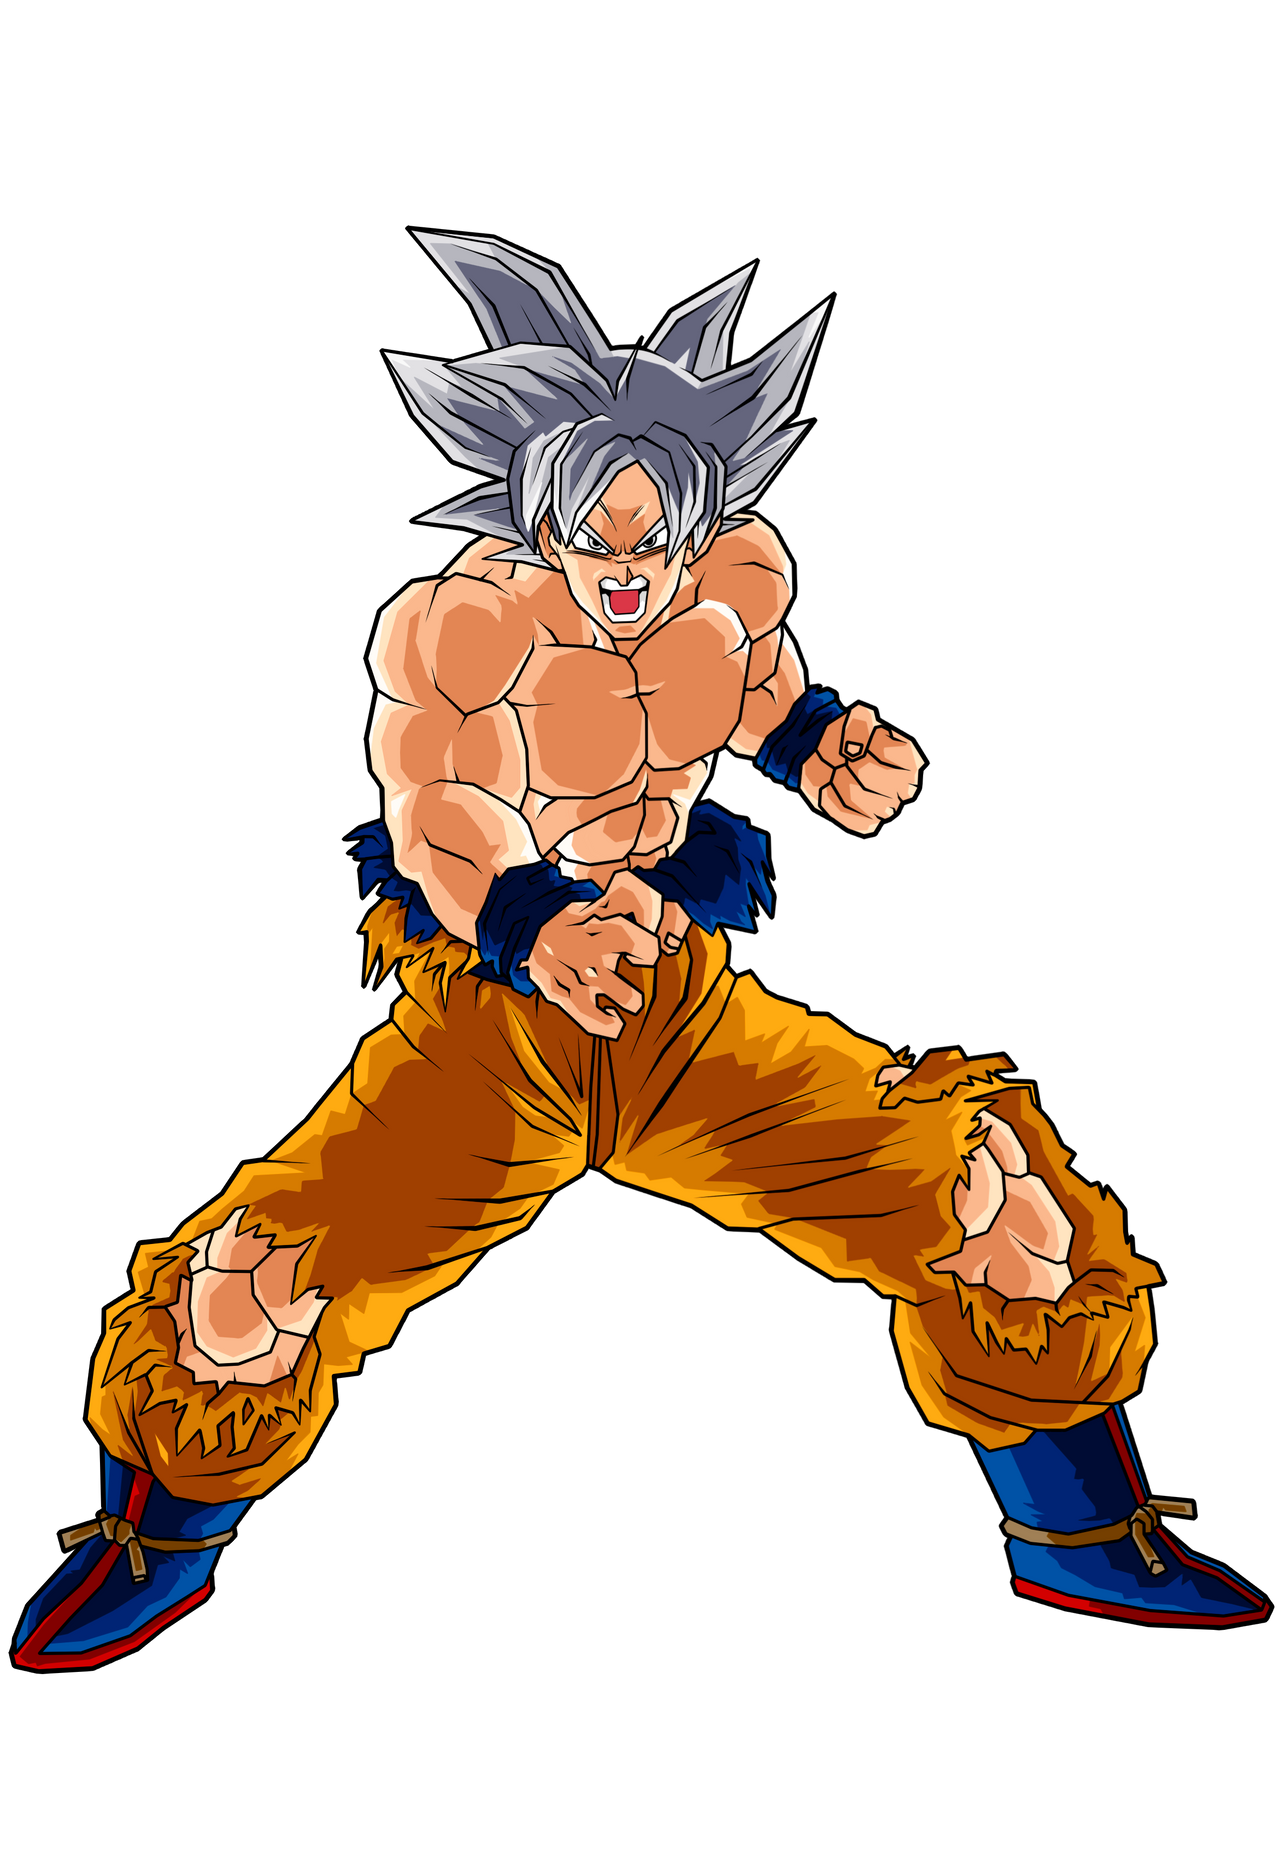 DBZ - Son Goku Super Saiyajin (Namek) by el-maky-z on DeviantArt